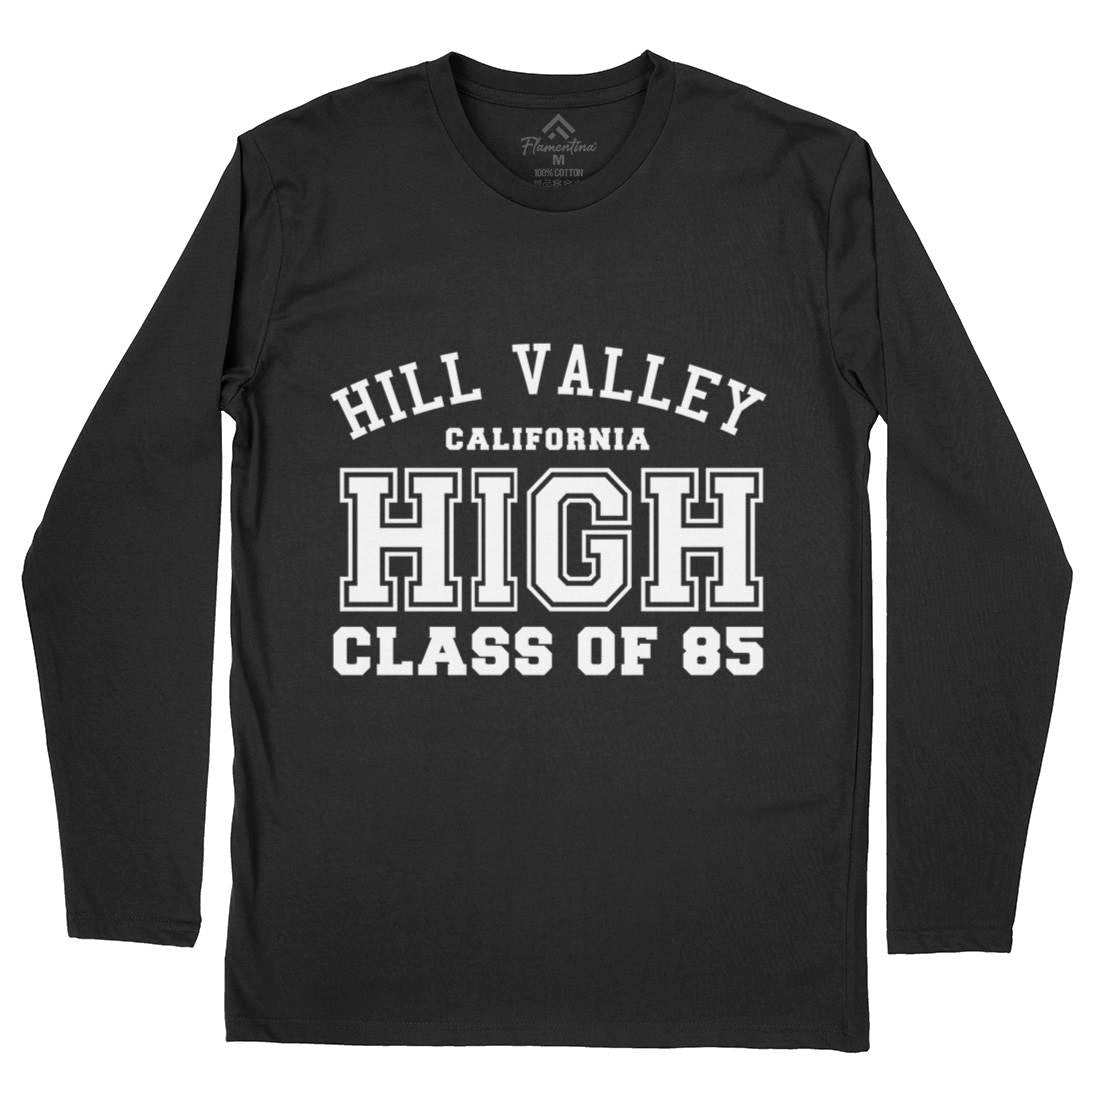 Hill Valley Mens Long Sleeve T-Shirt Space D113